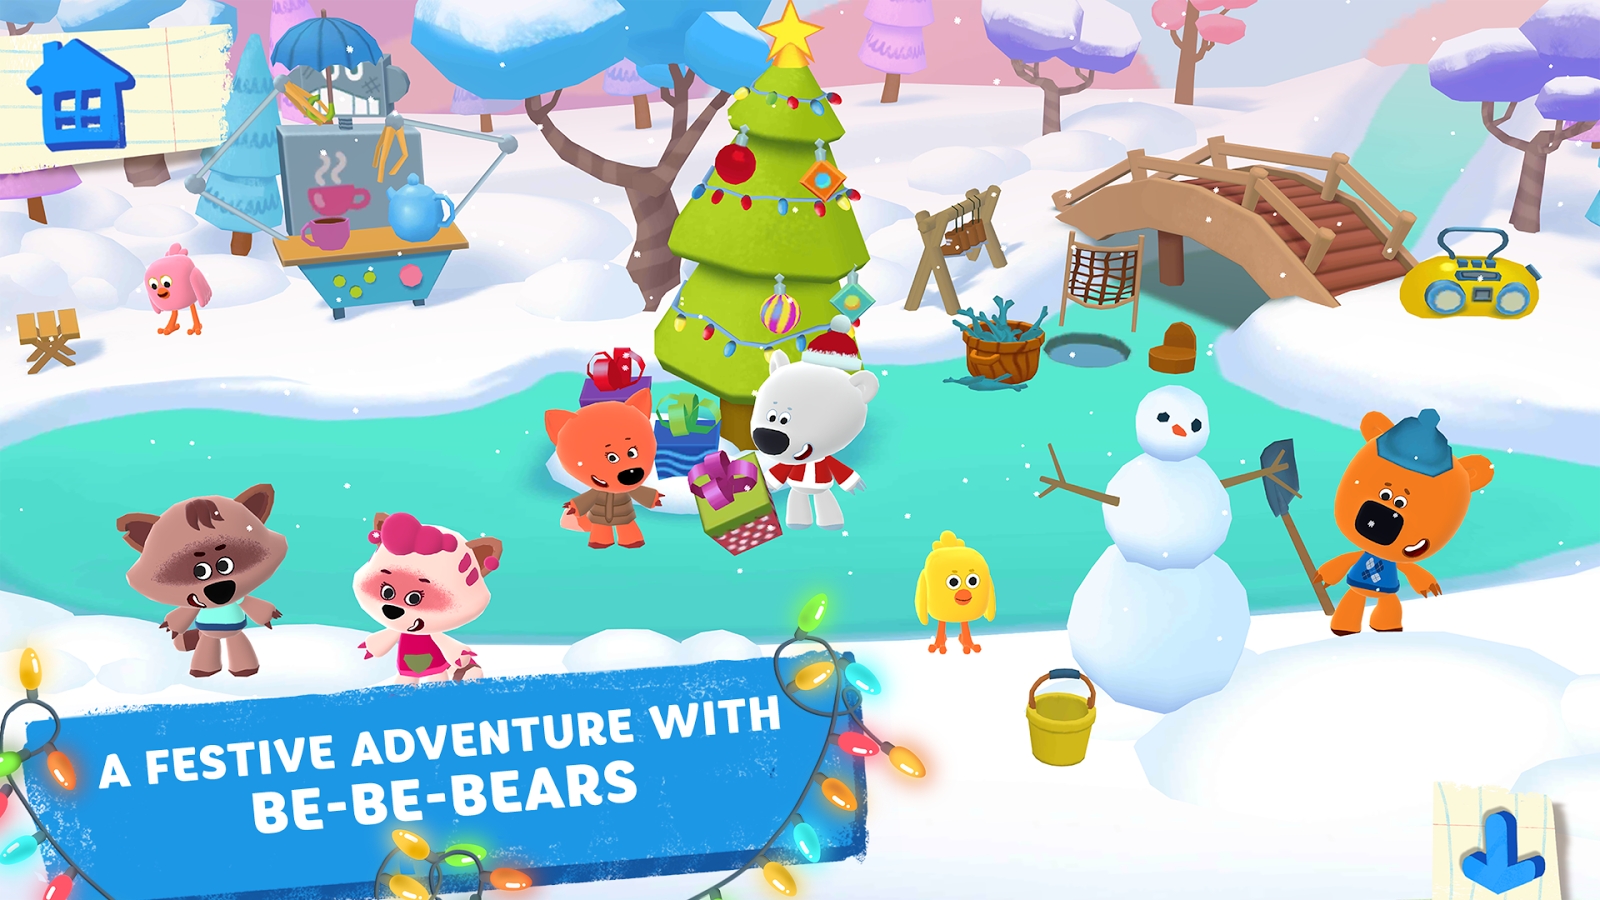 Be-be-bears - Merry Christmas